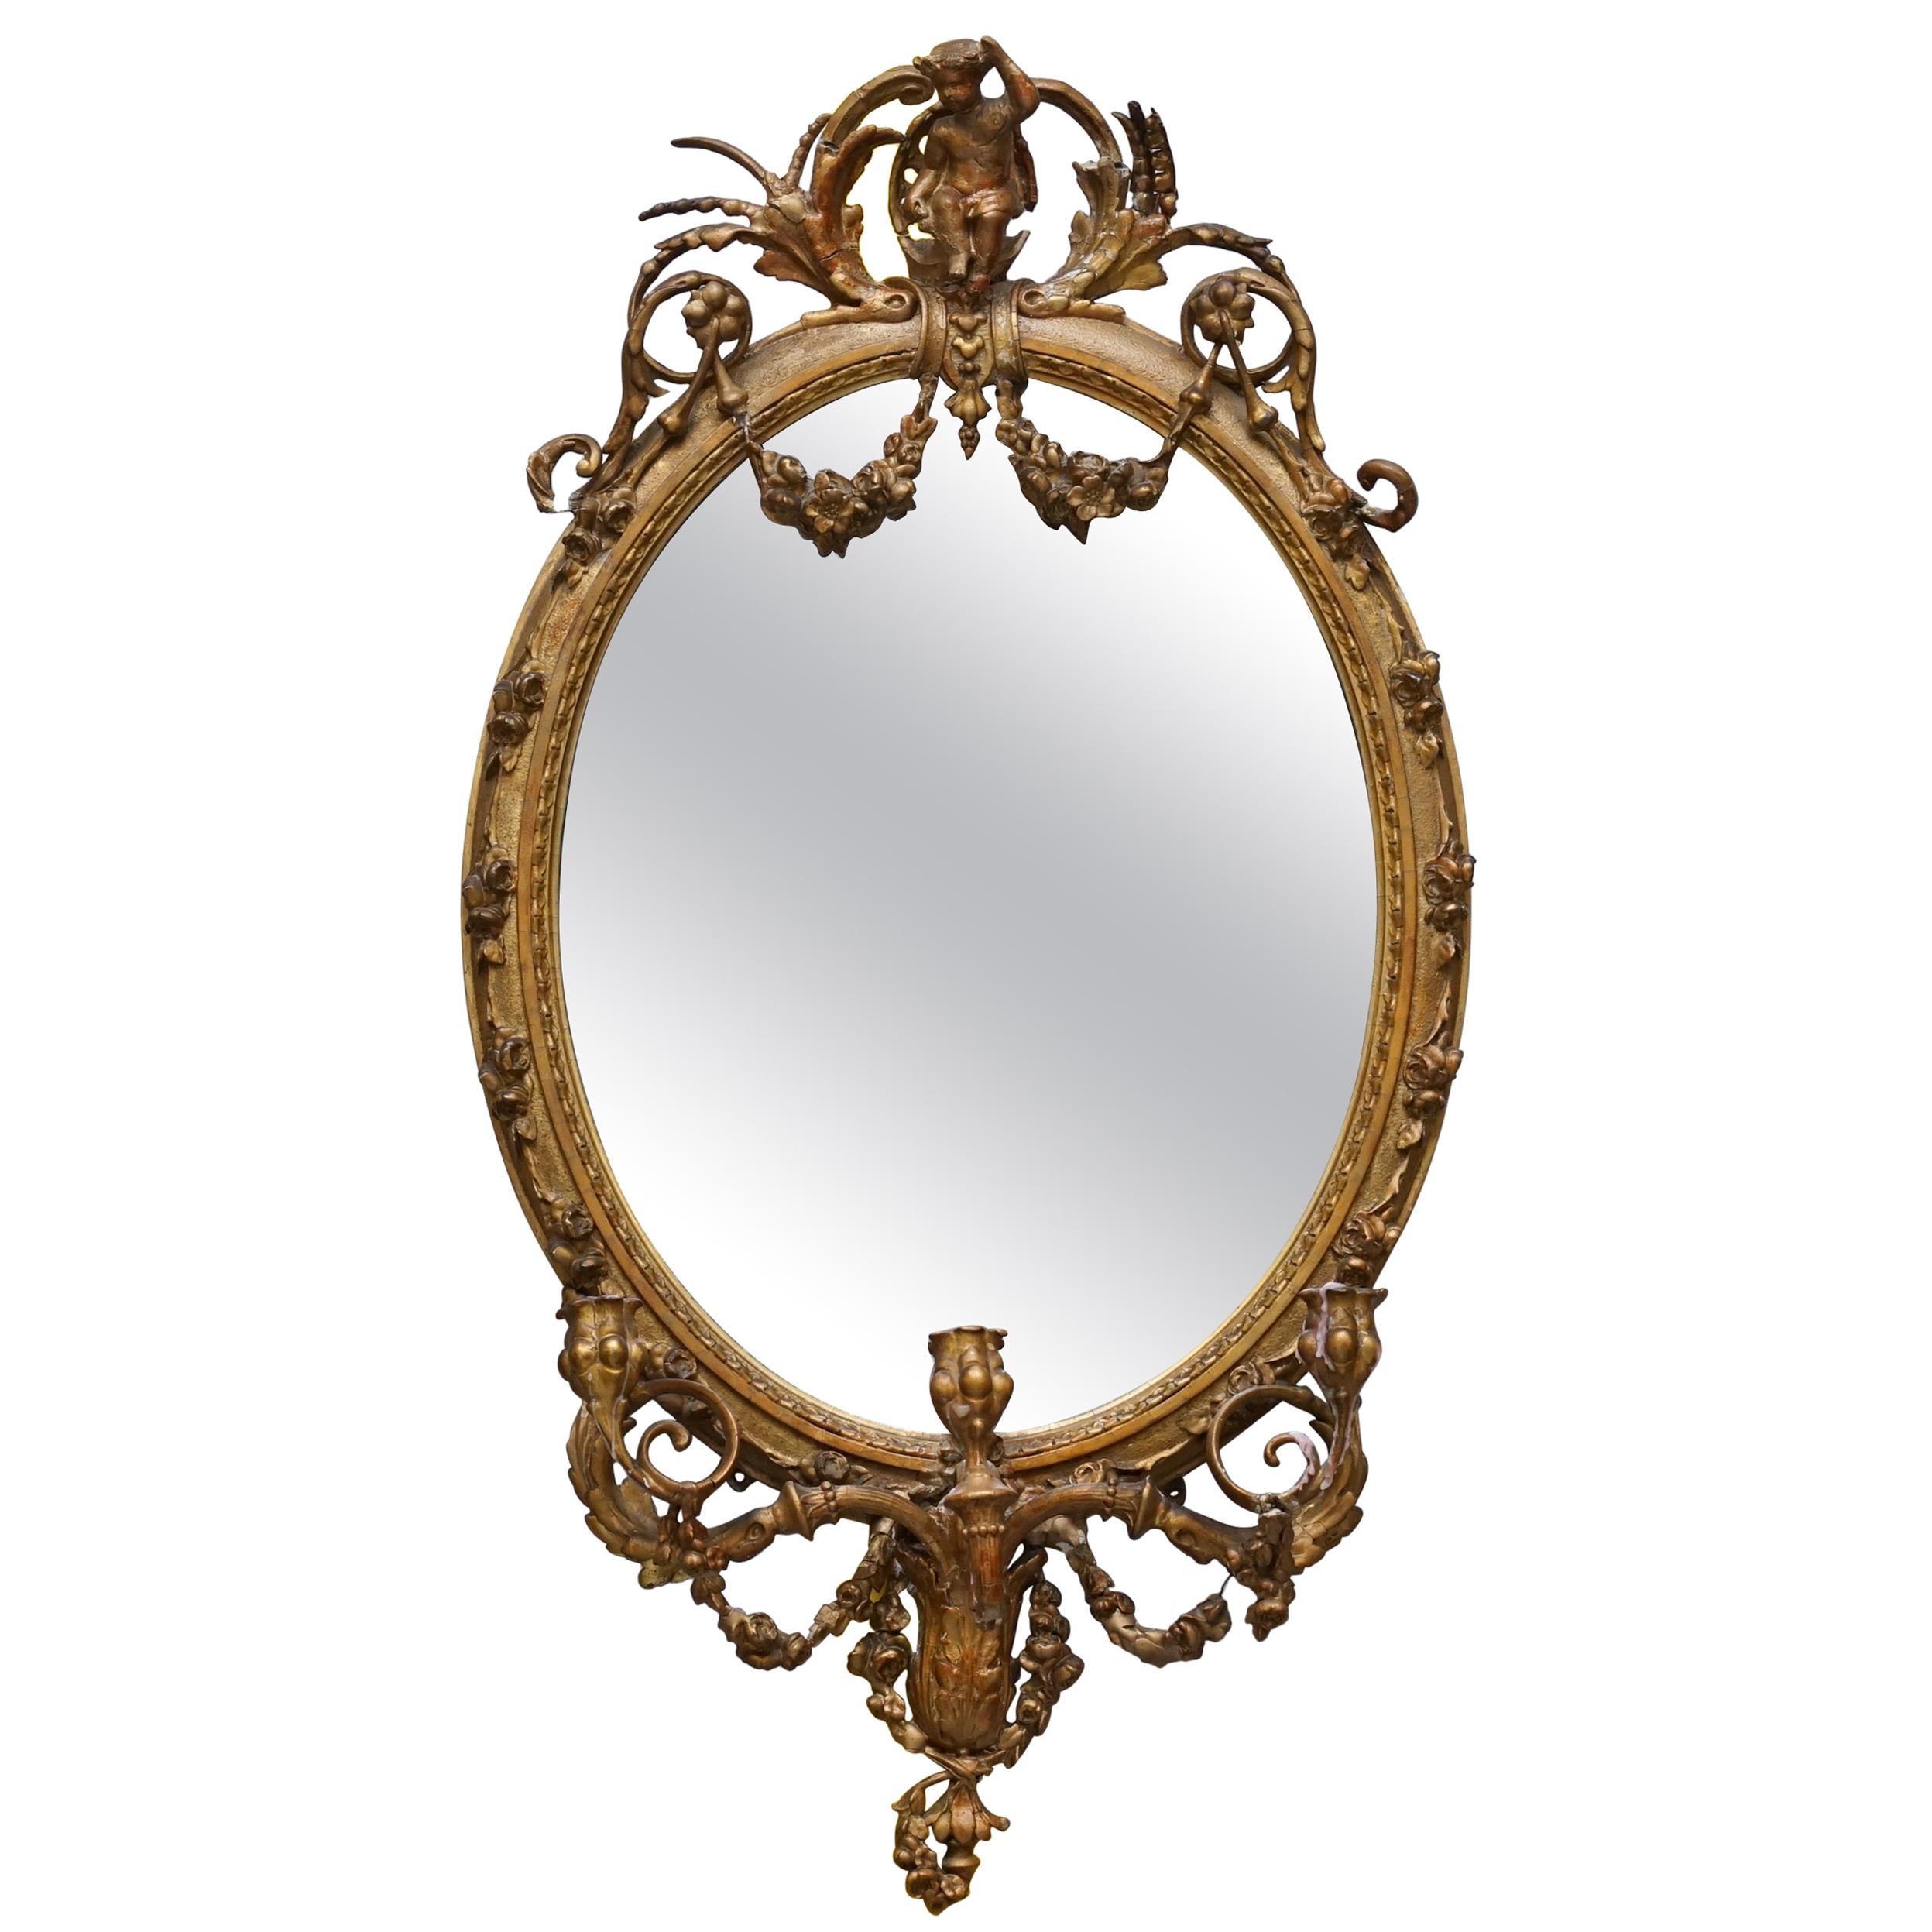 Original circa 1800 Gold Gilt Frame Girandole Mirror Carved Cherub Putti Angel For Sale